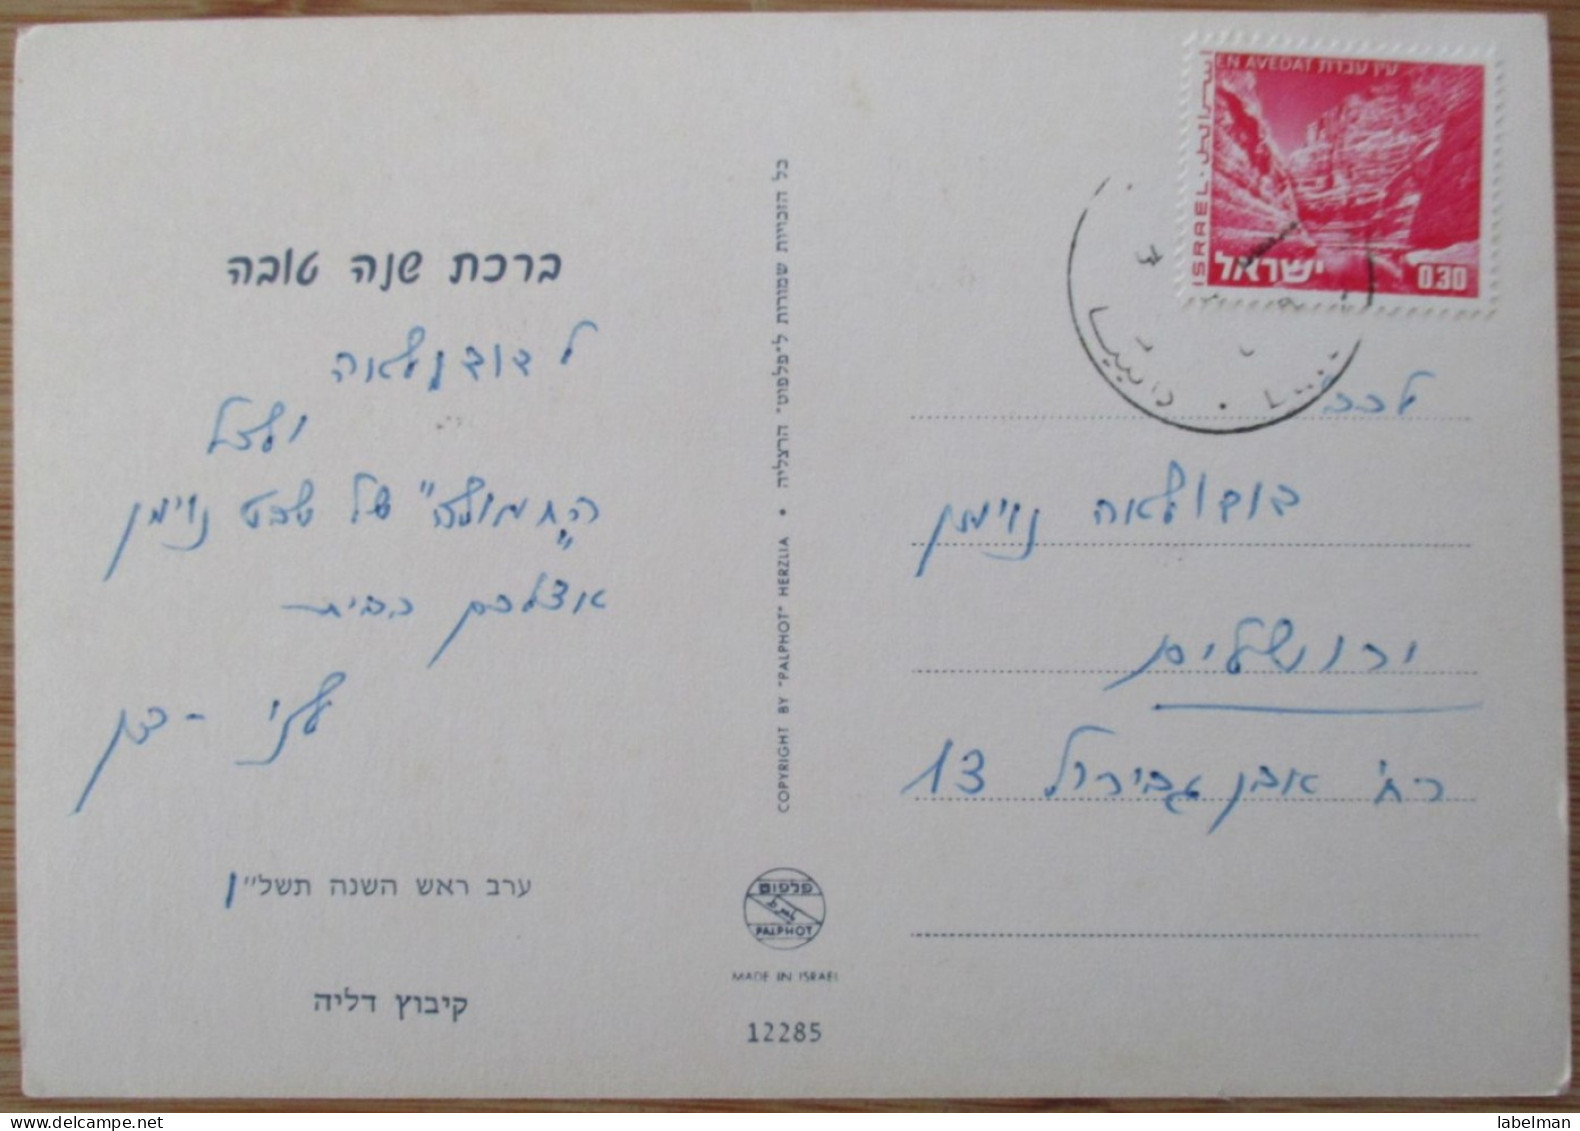 ISRAEL GALILEE KIBBUTZ DALIA SHANA TOVA NEW YEAR CARD POSTCARD CARTE POSTALE ANSICHTSKARTE CARTOLINA POSTKARTE - Israel